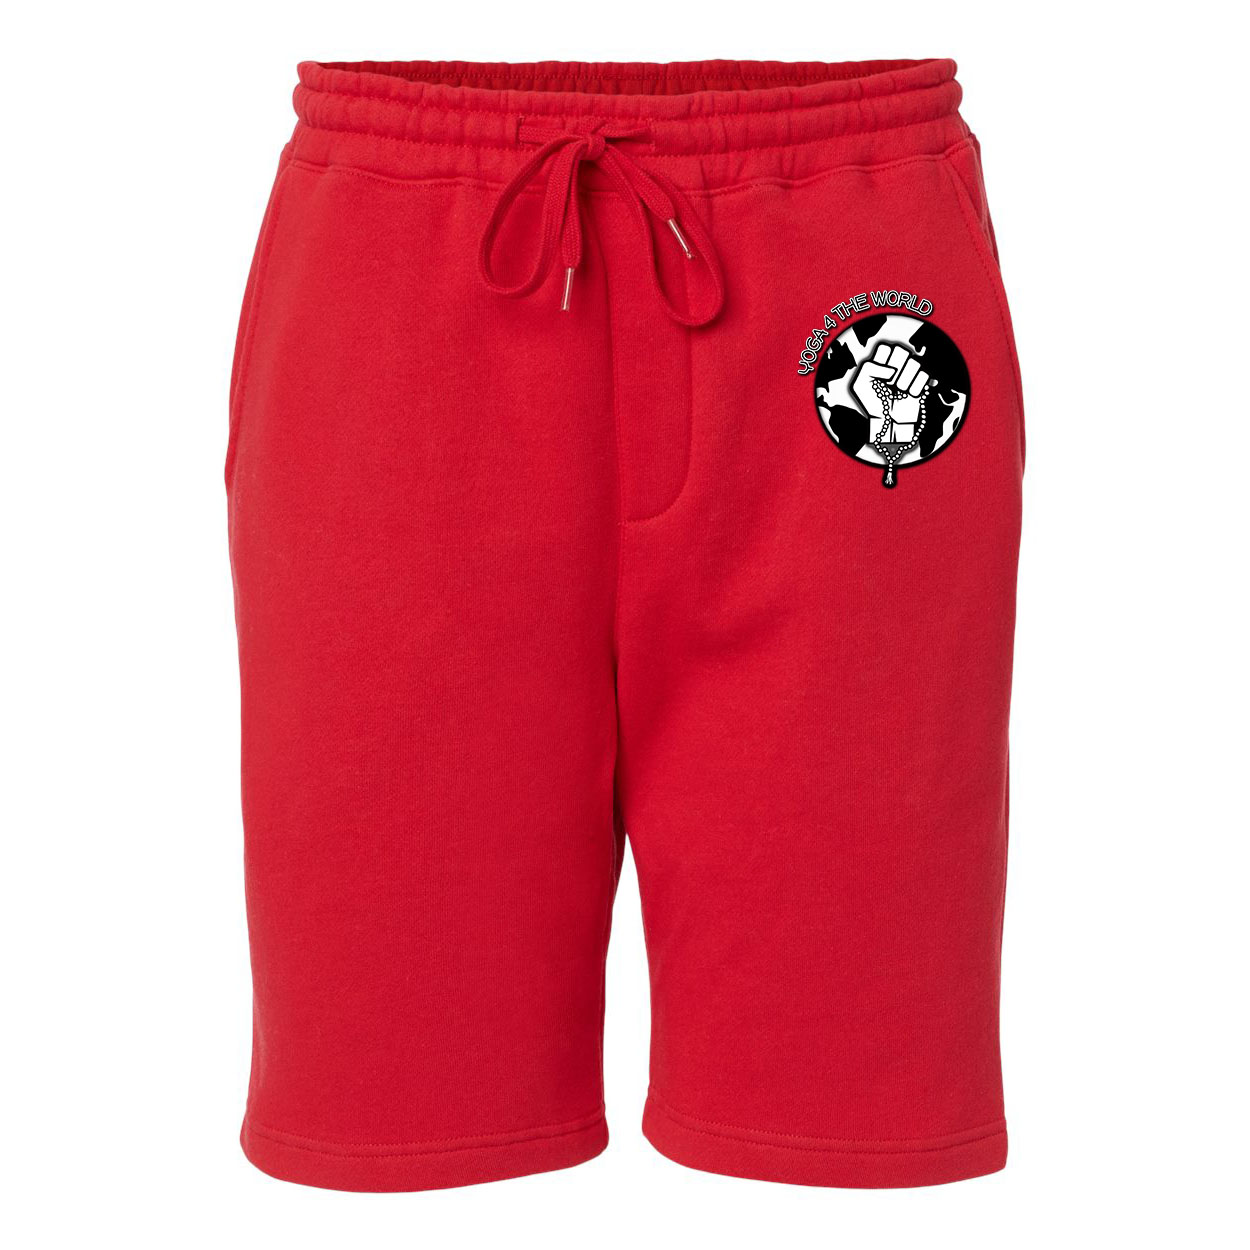 Yoga4TheWorld Red Fleece Shorts